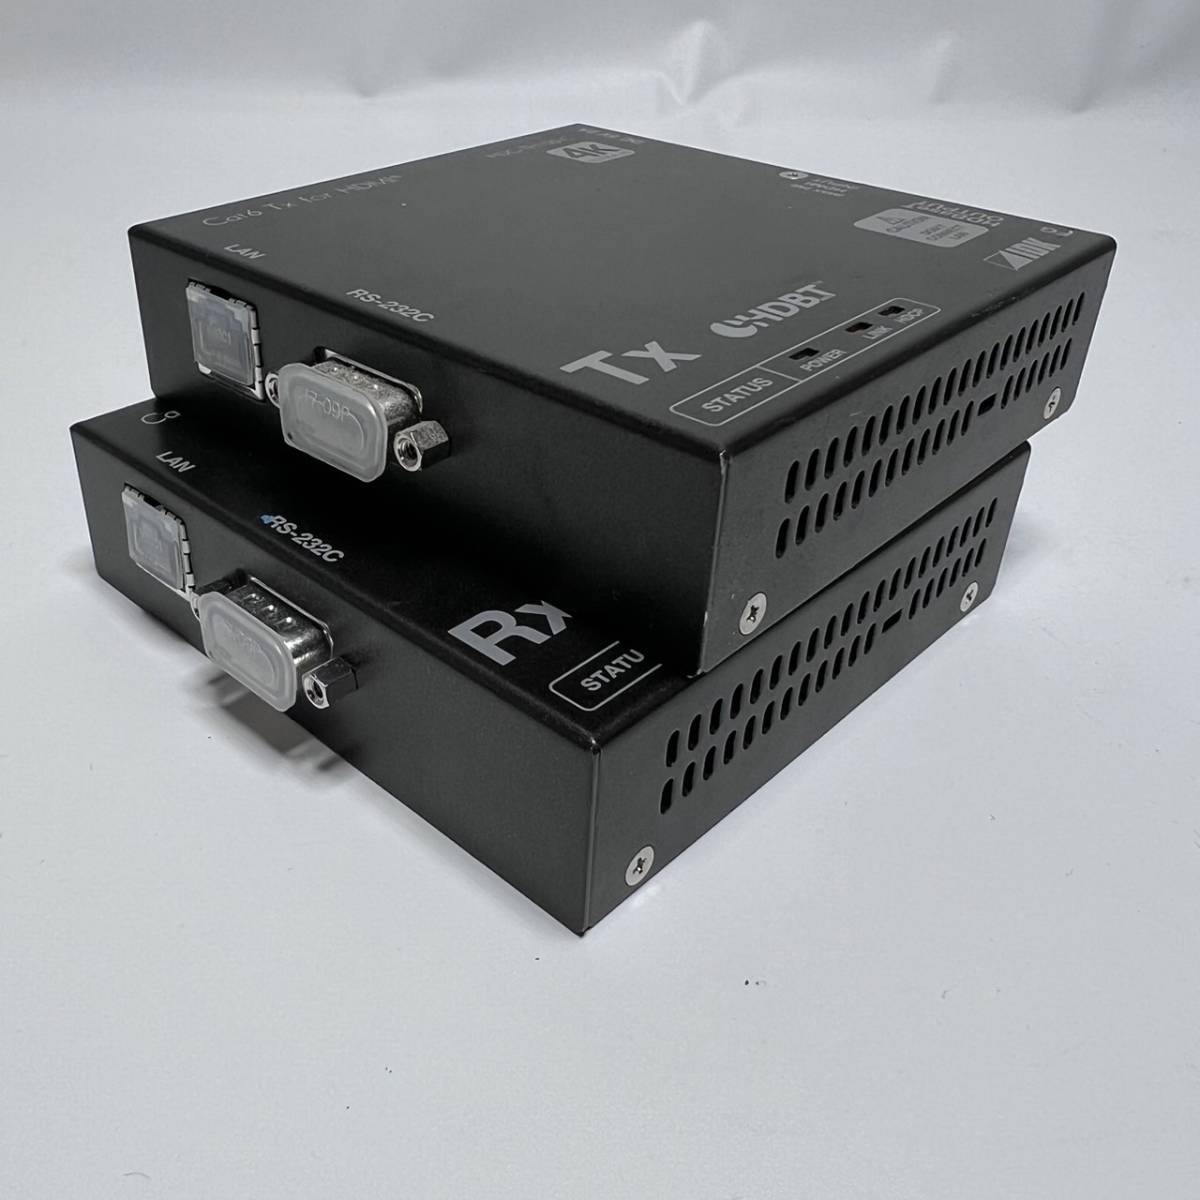 IDK 4K@60 HDMIツイストペアケーブル延長器 HDC-TH100C (送信器) と HDC-RH100C (受信器) セット ★857_画像3